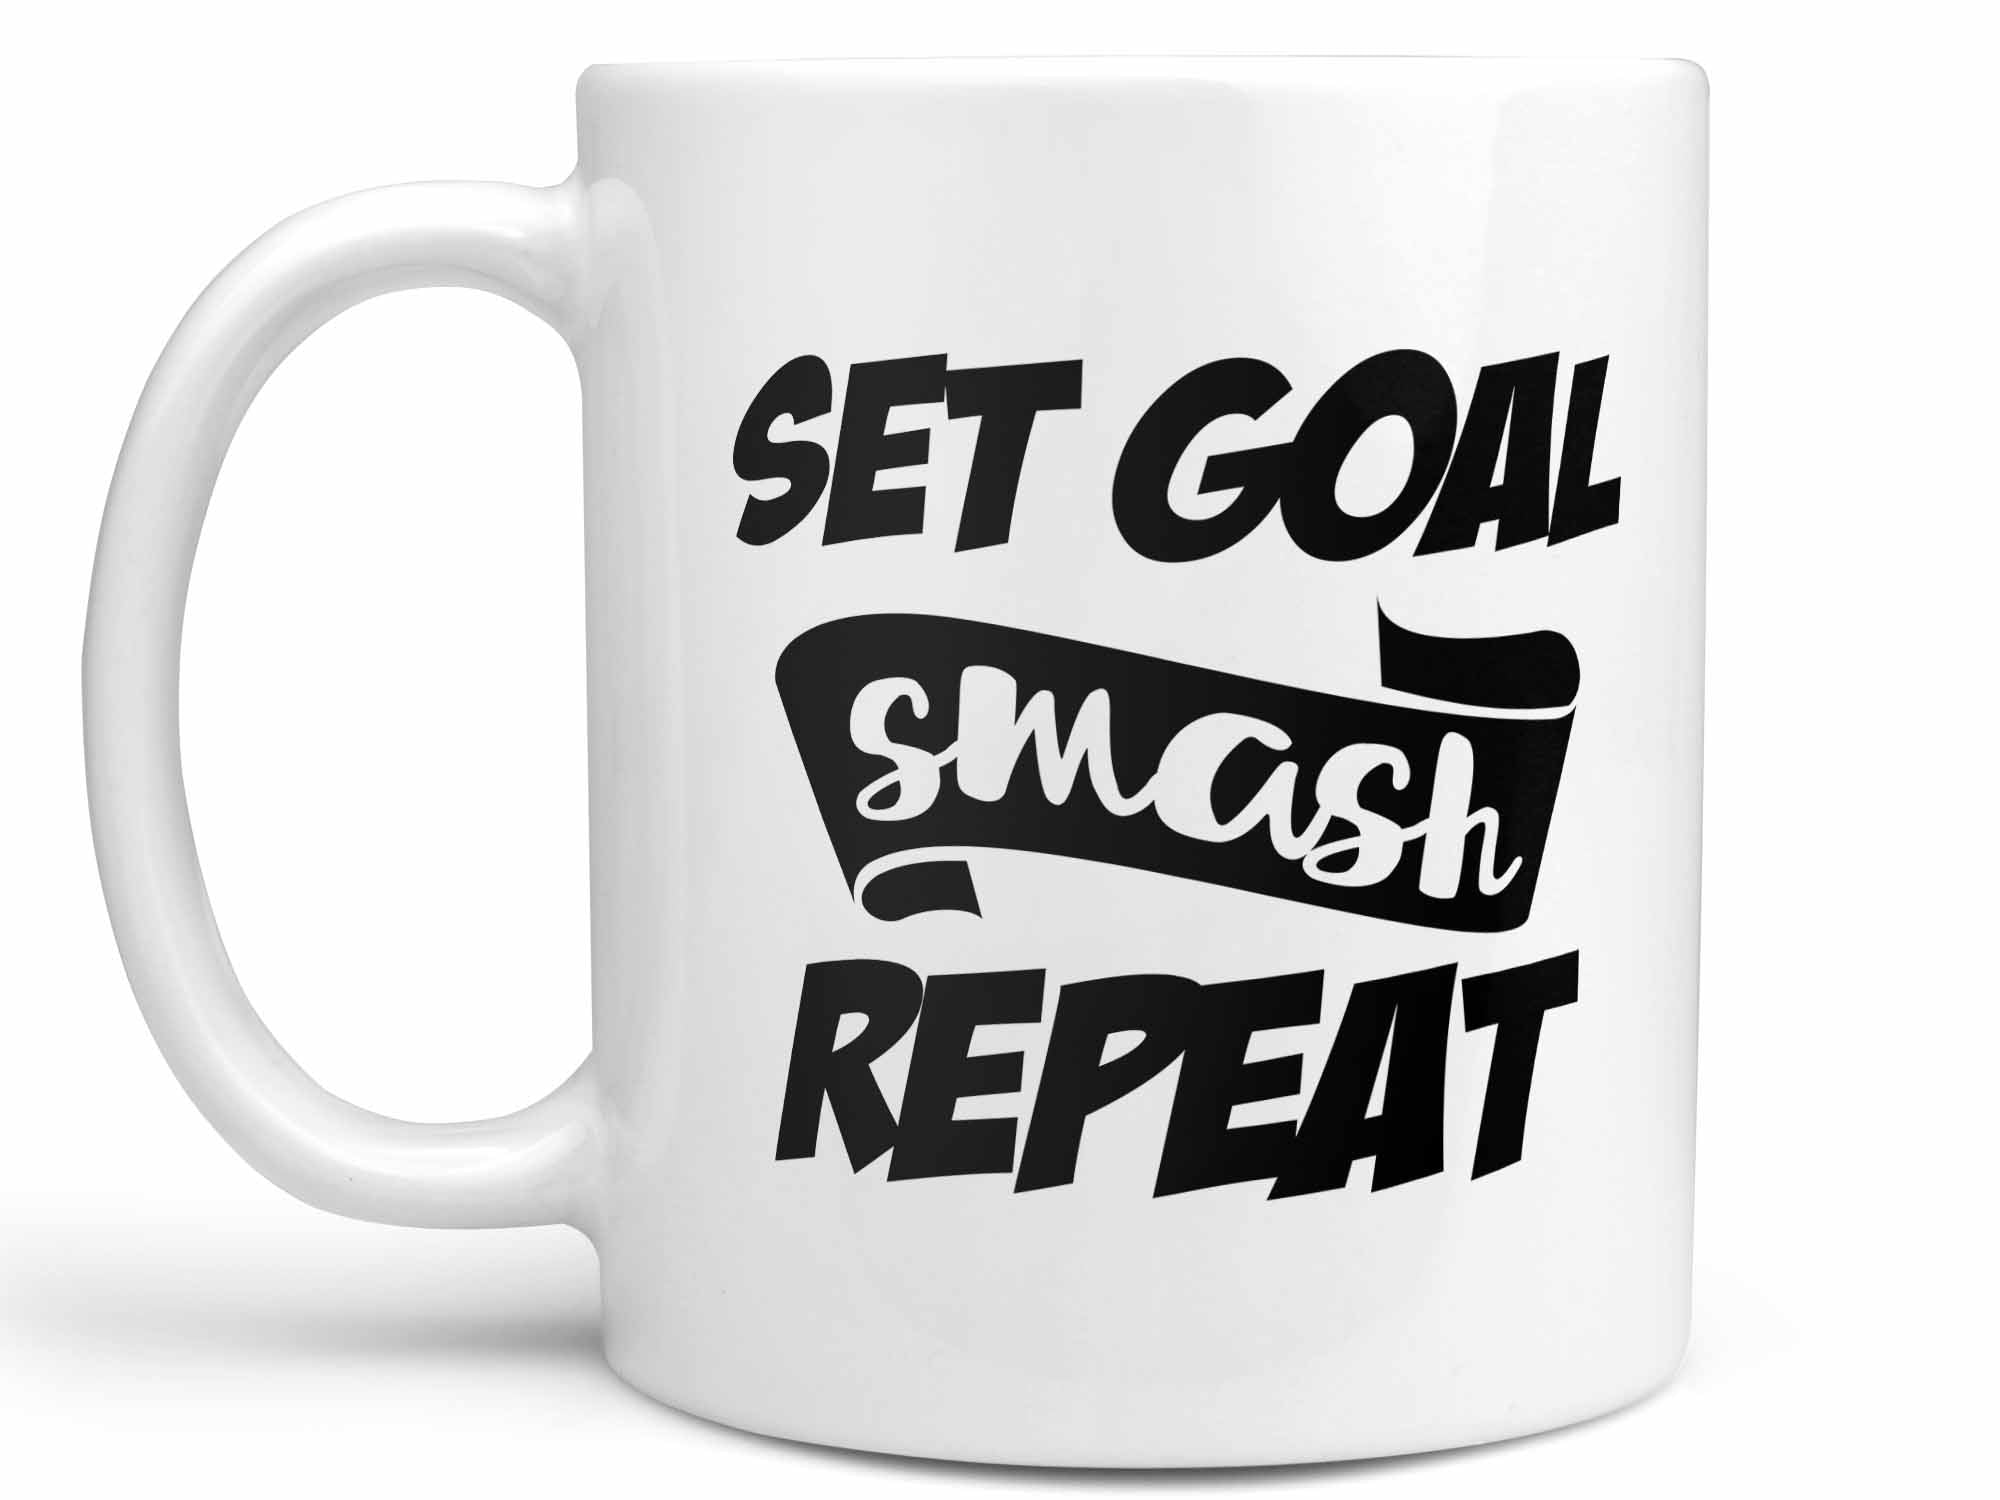 Set Goal Smash Repeat Coffee Mug,Coffee Mugs Never Lie,Coffee Mug